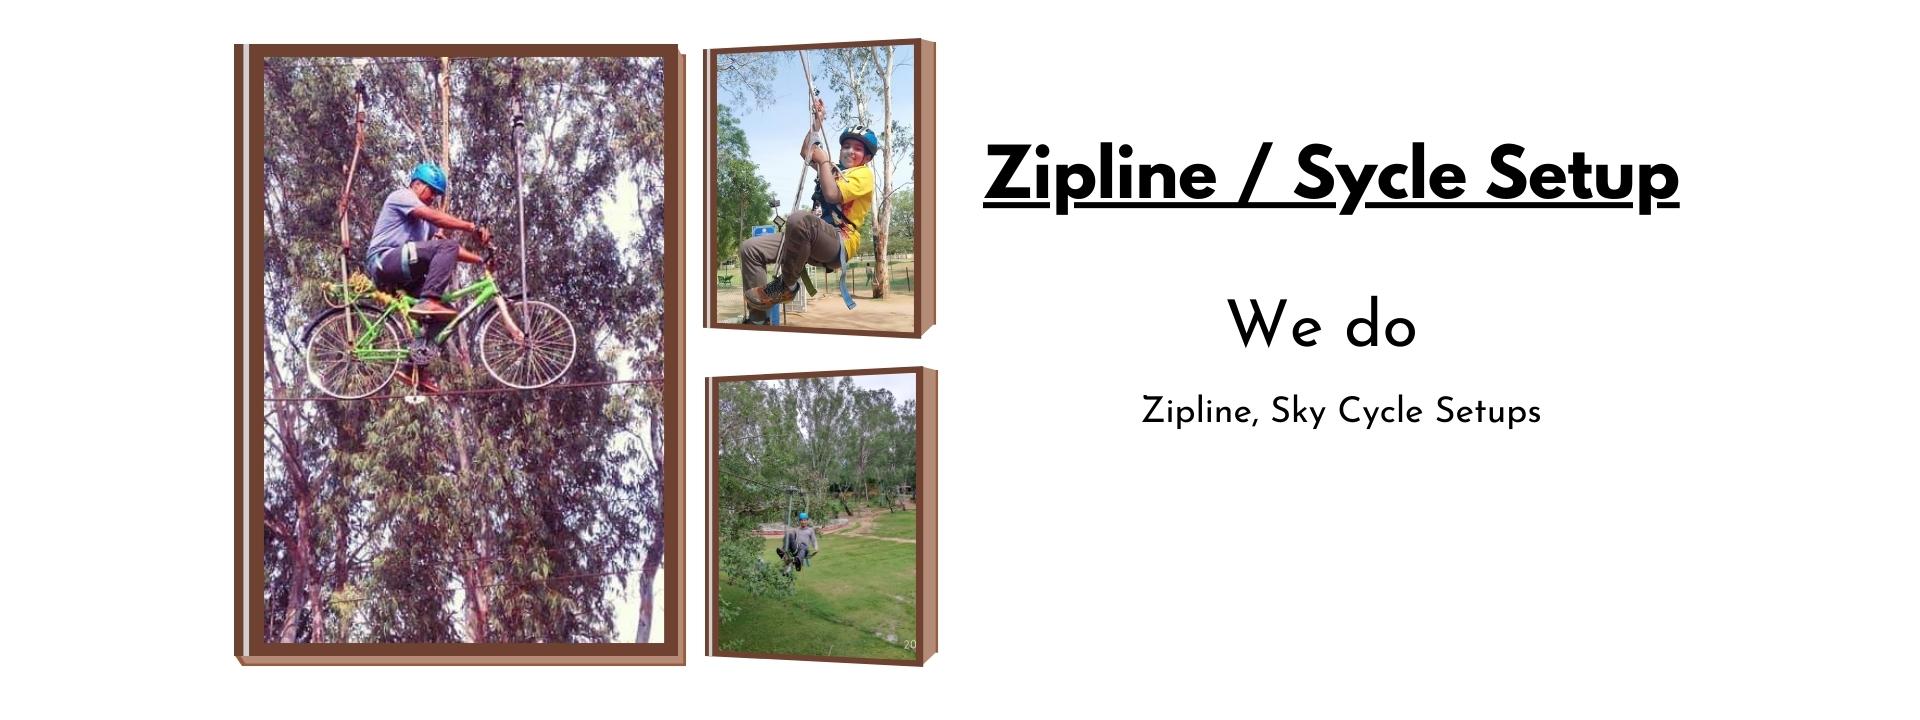 Zip line Setup | Zipline Works